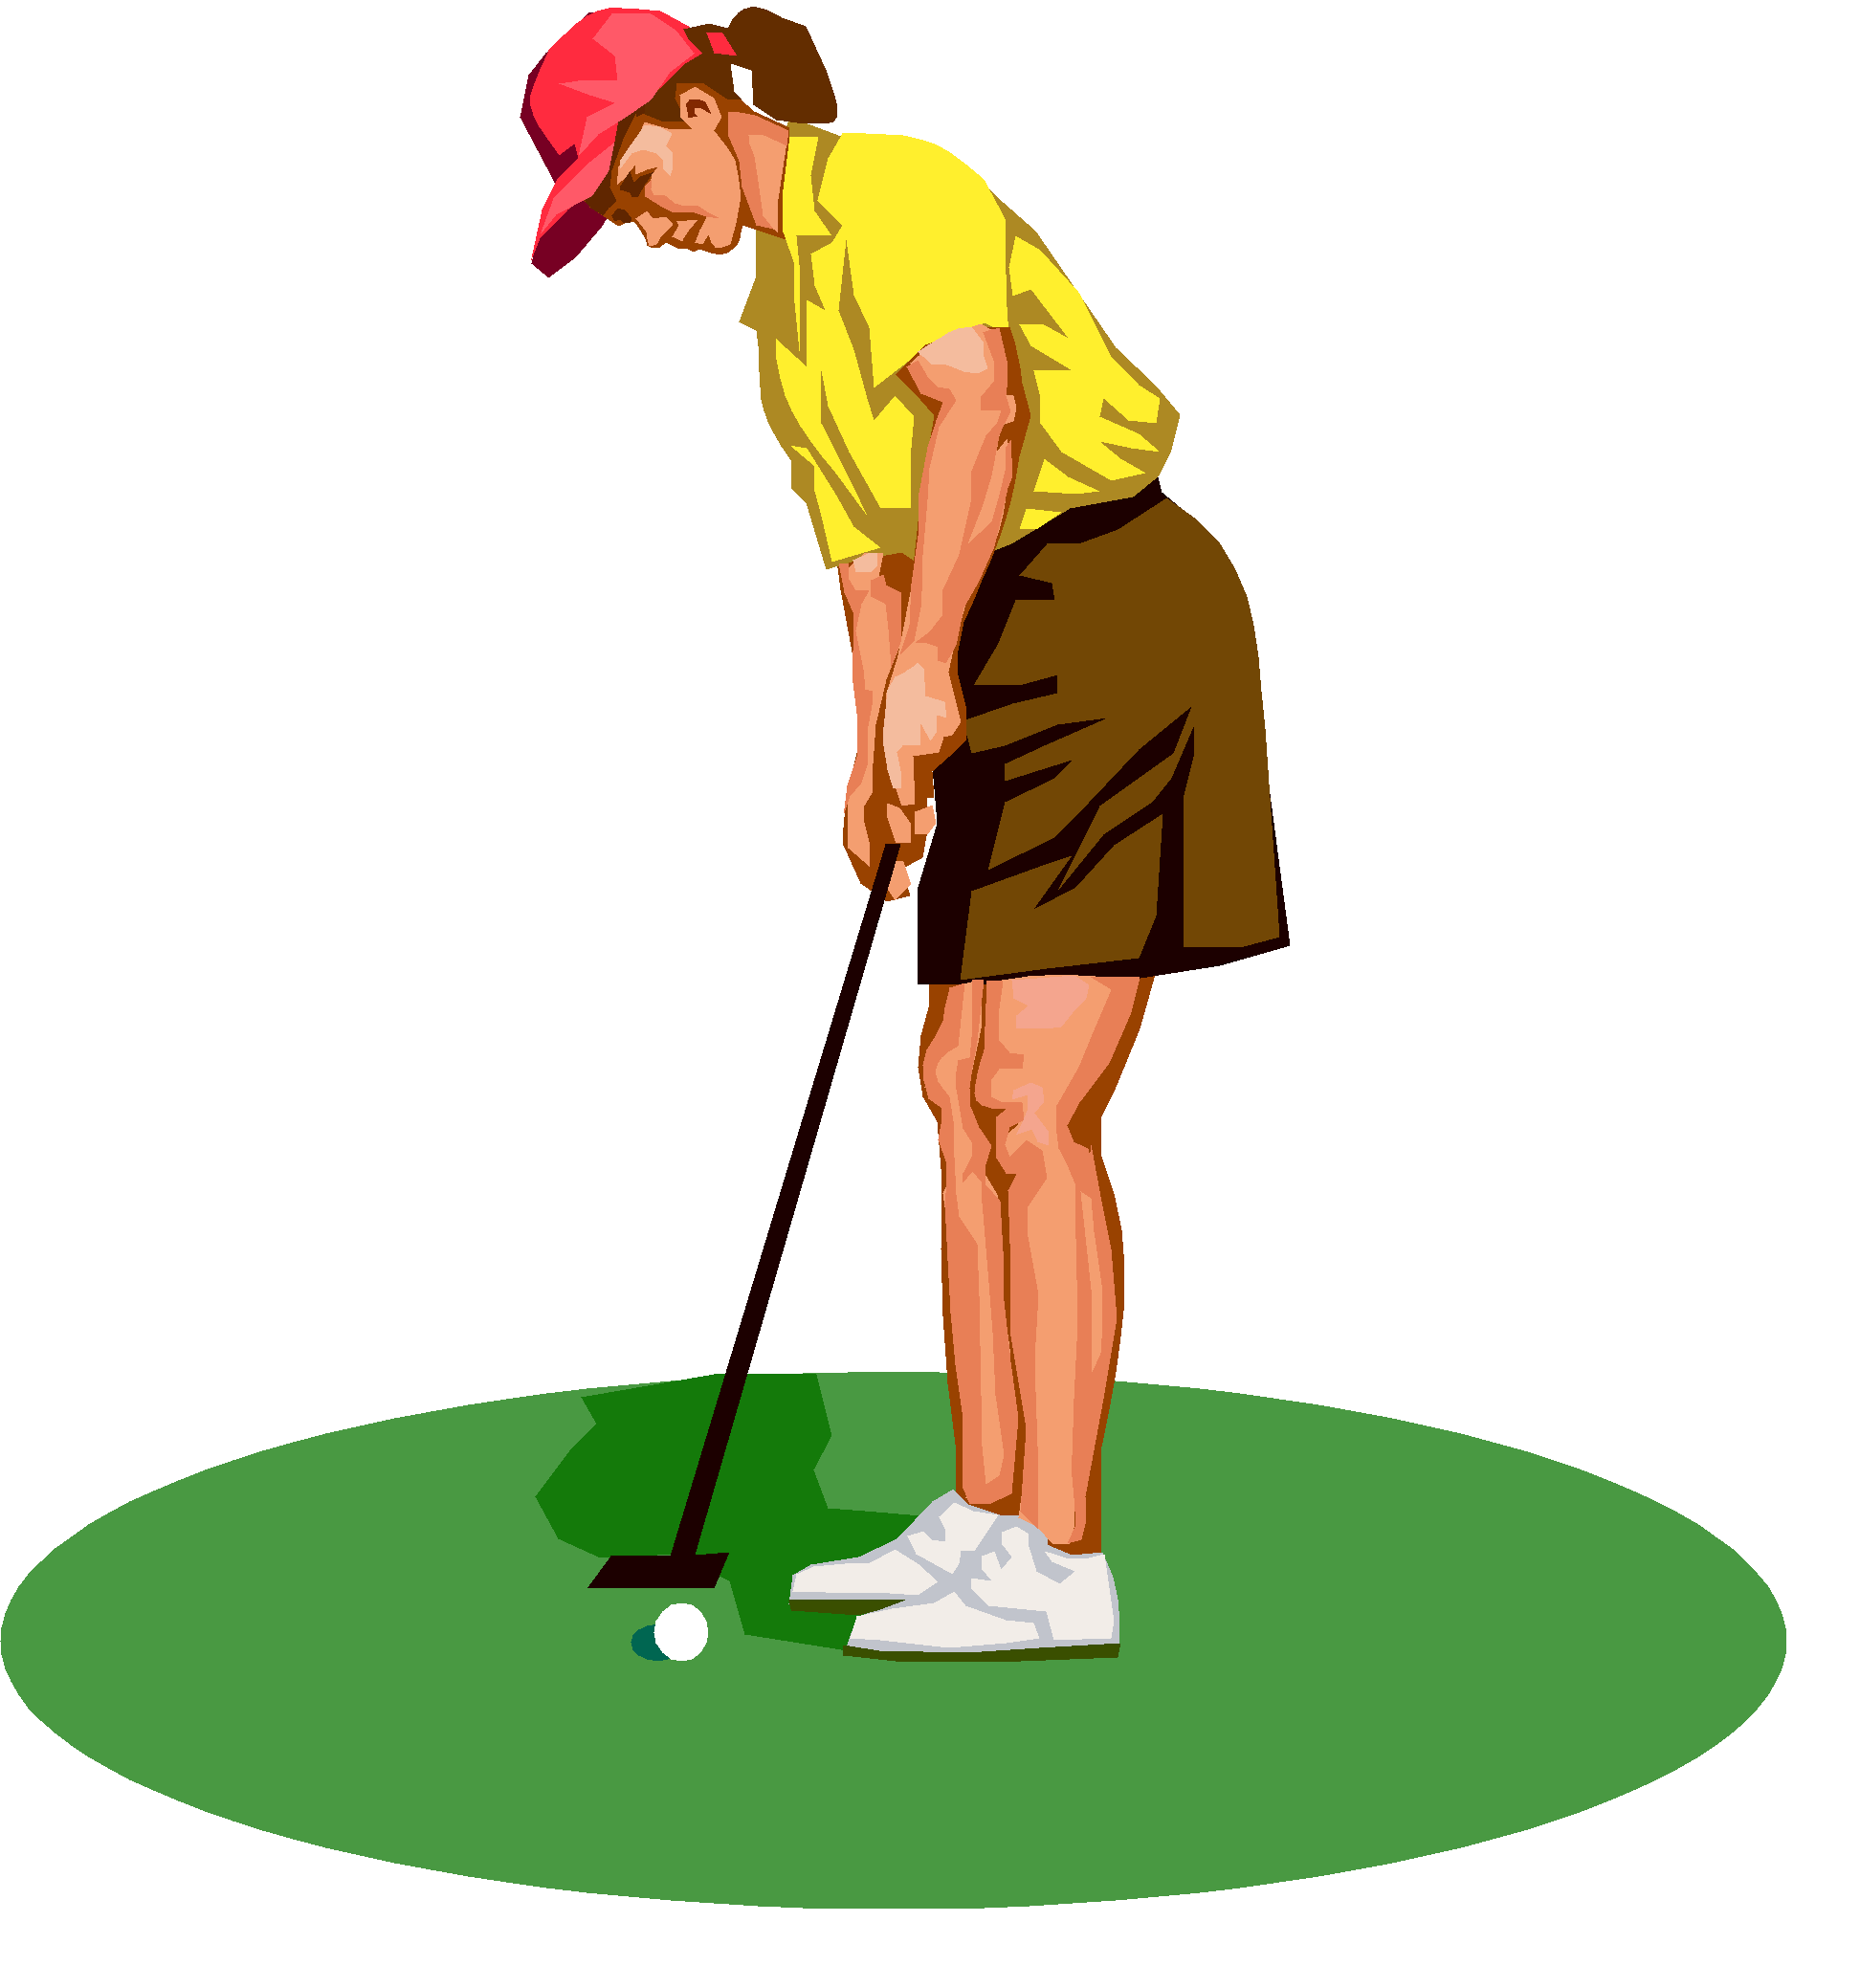 Miniature golf Clip art Golf png download 1944*2078